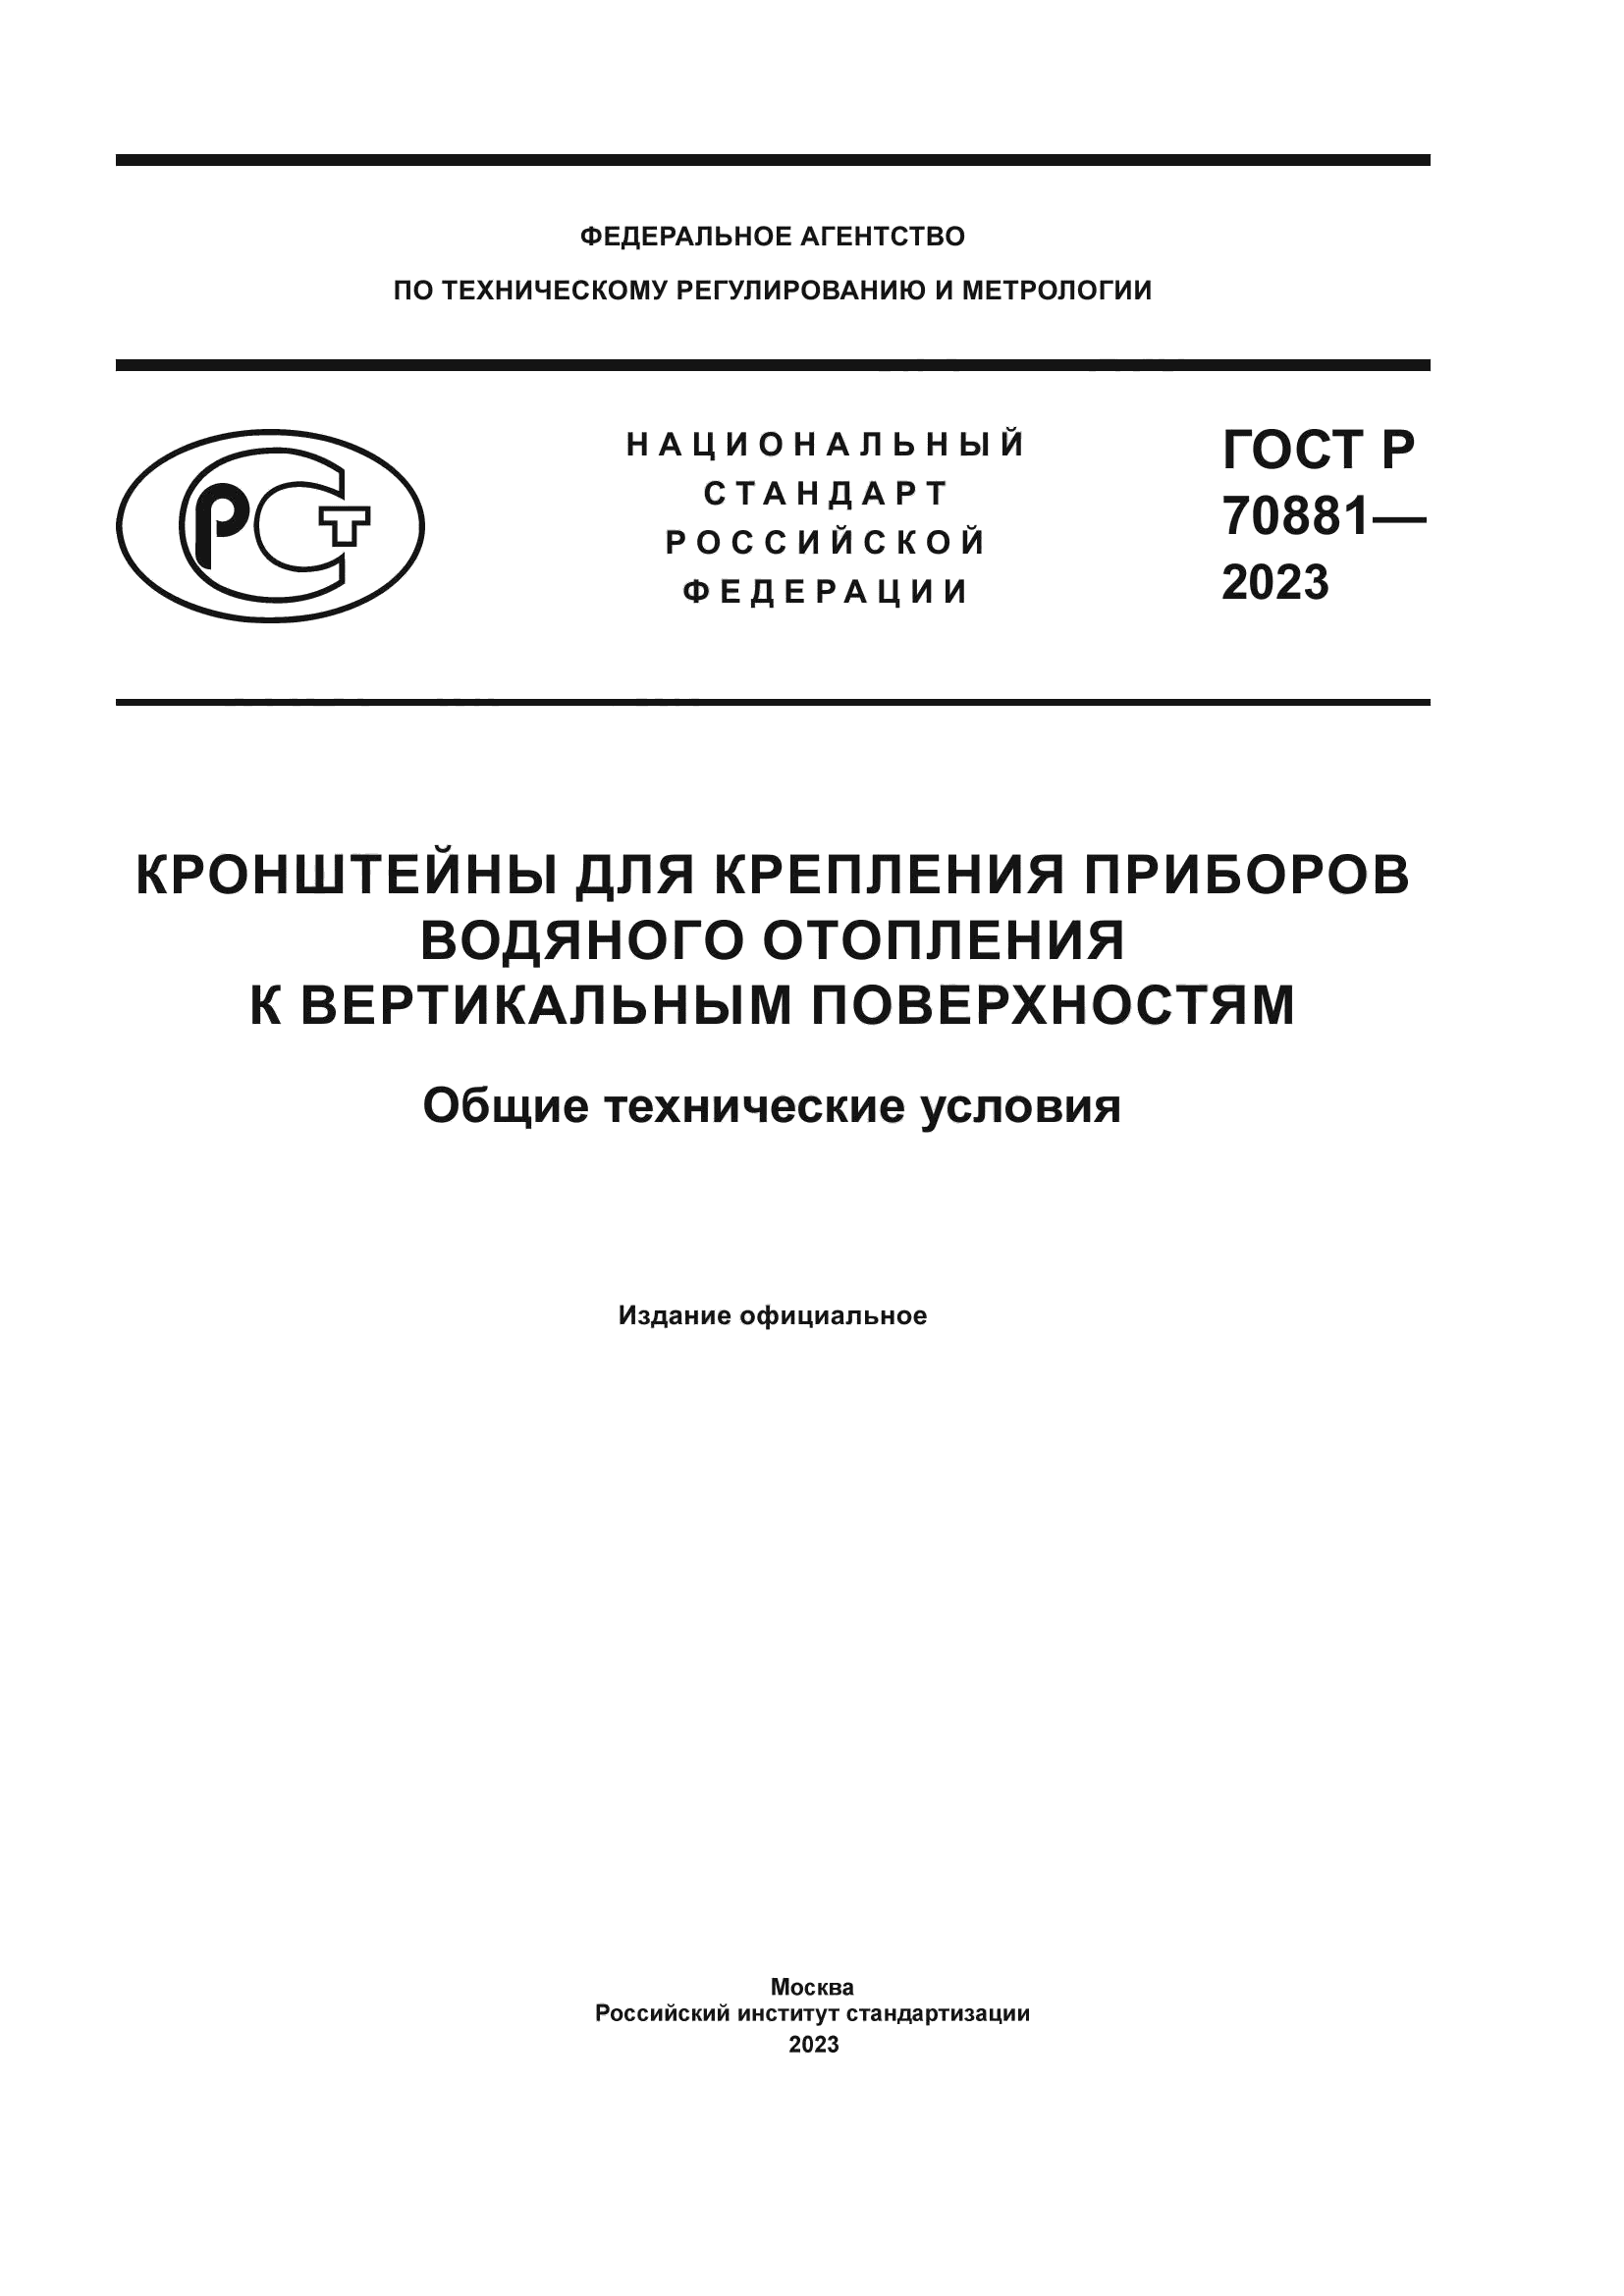 ГОСТ Р 70881-2023